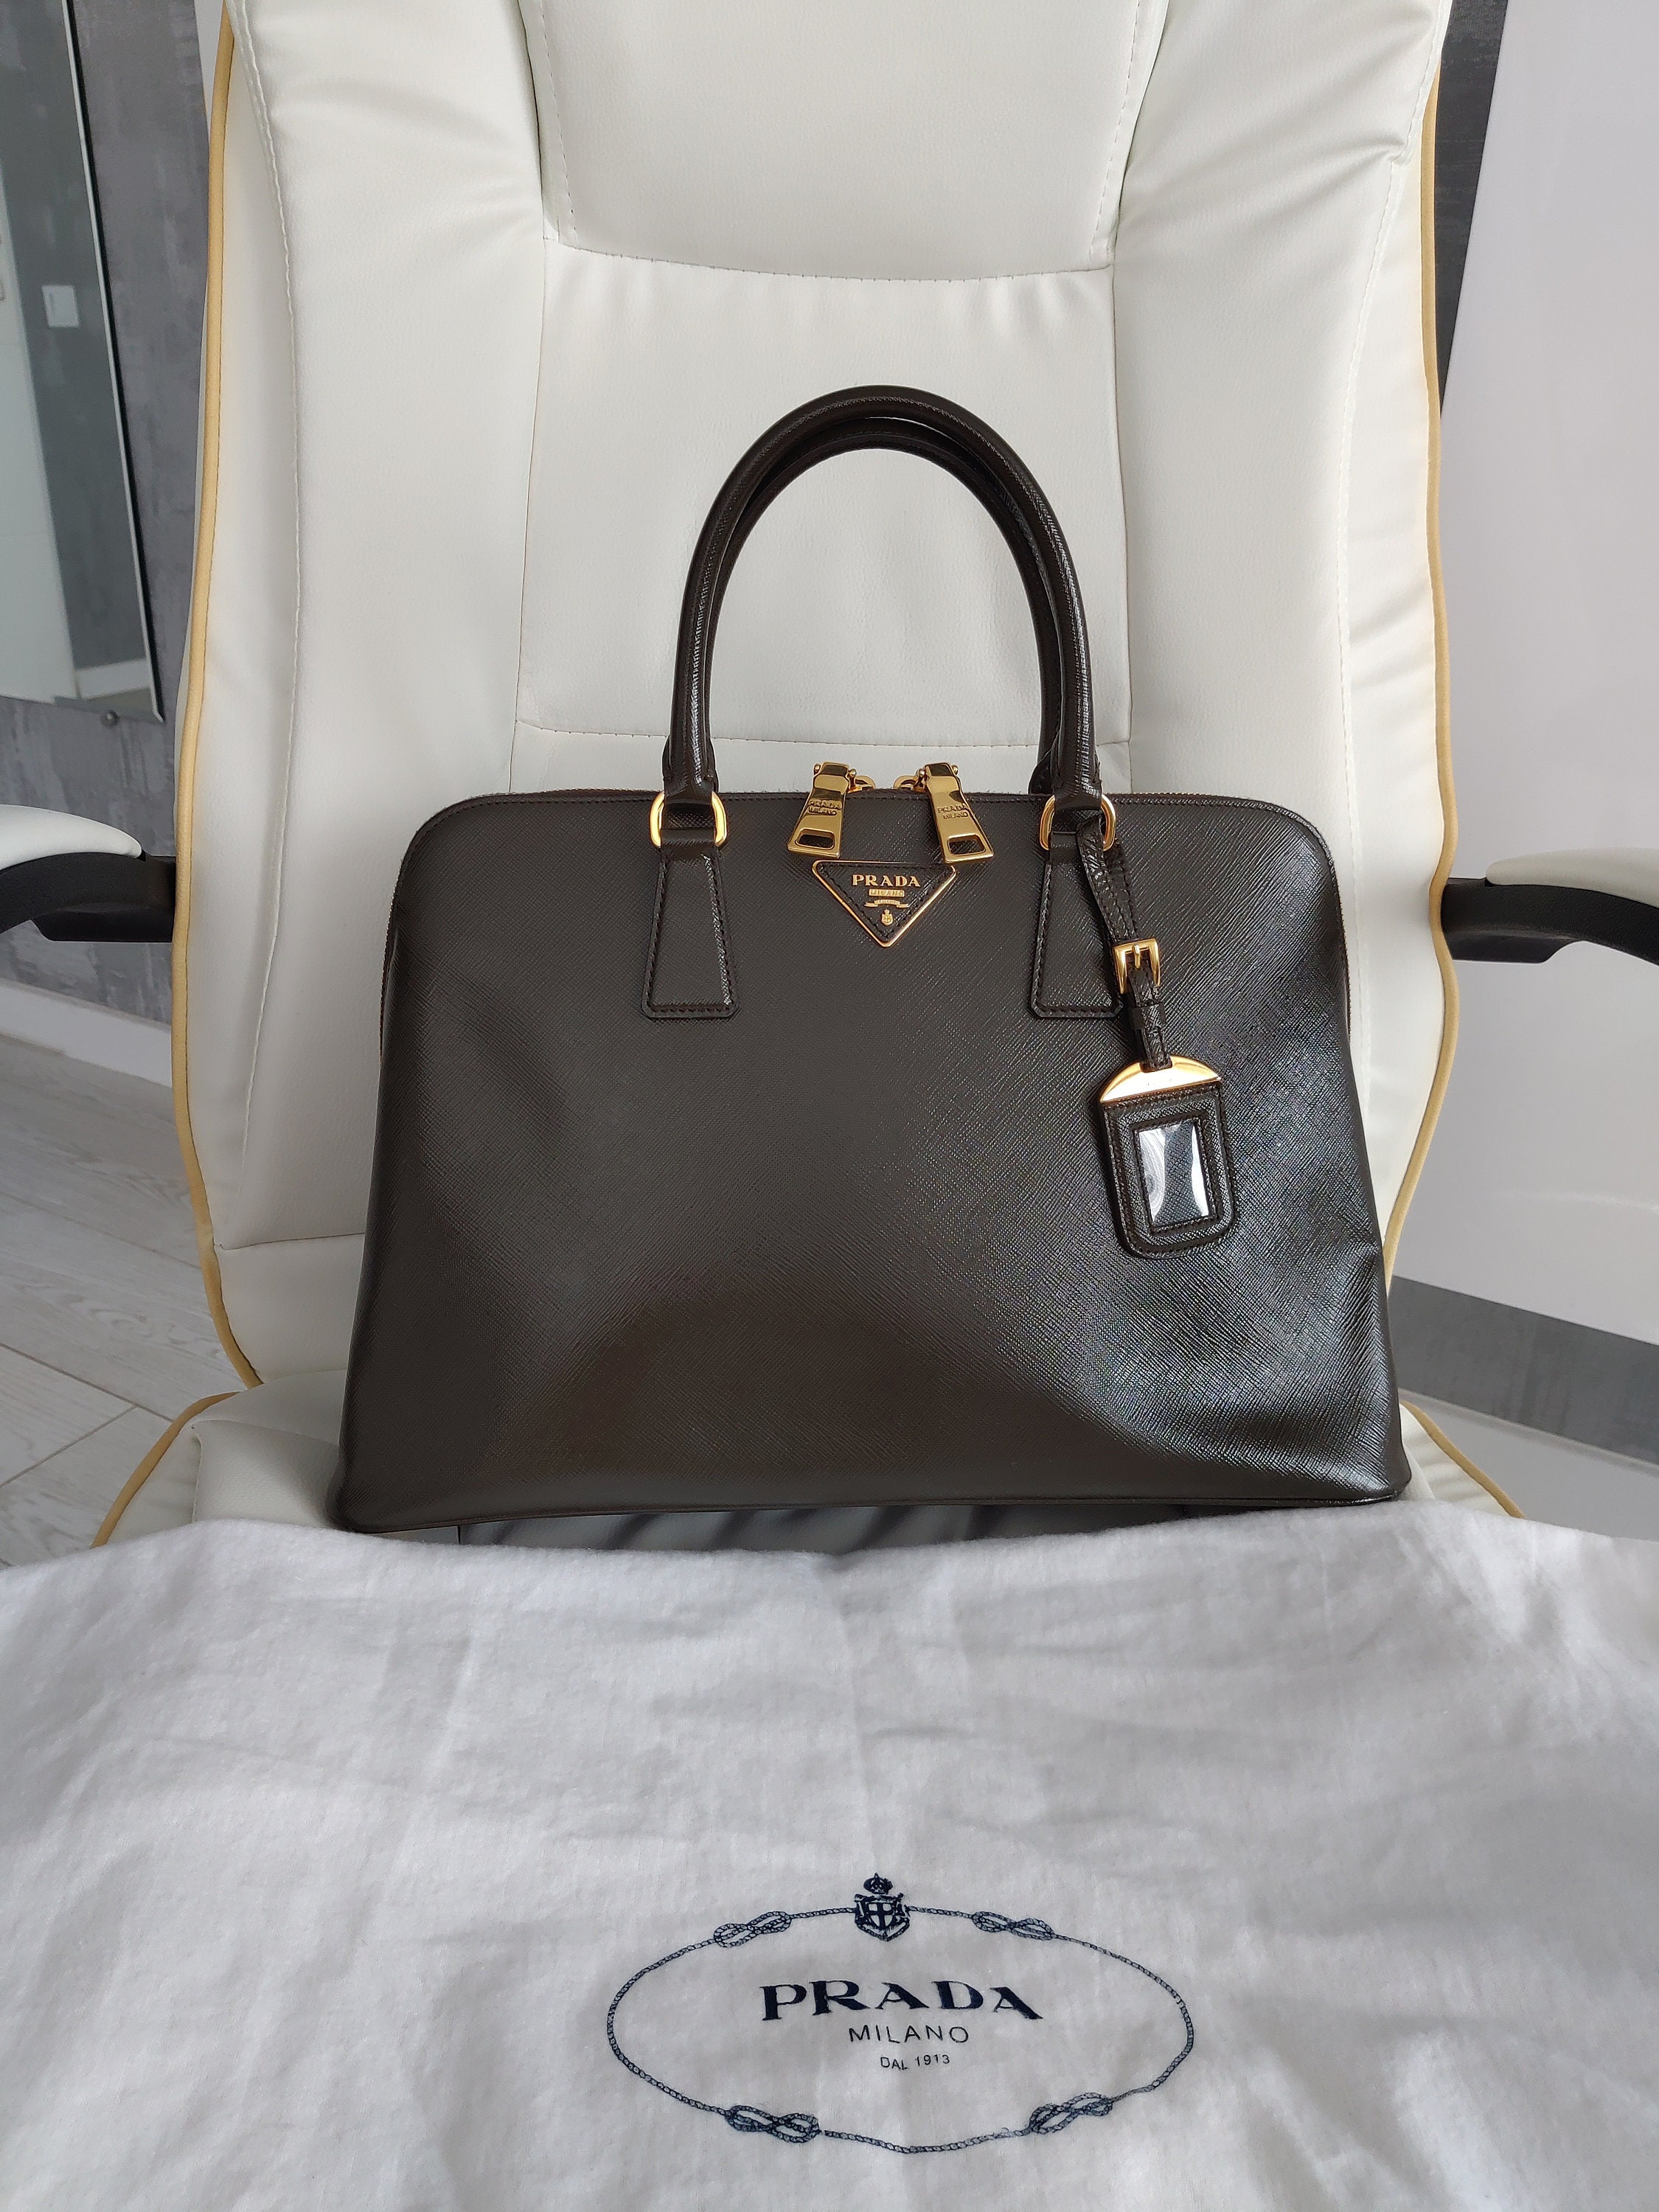 PRADA Pattina Glace Calf Leather Studded Bag